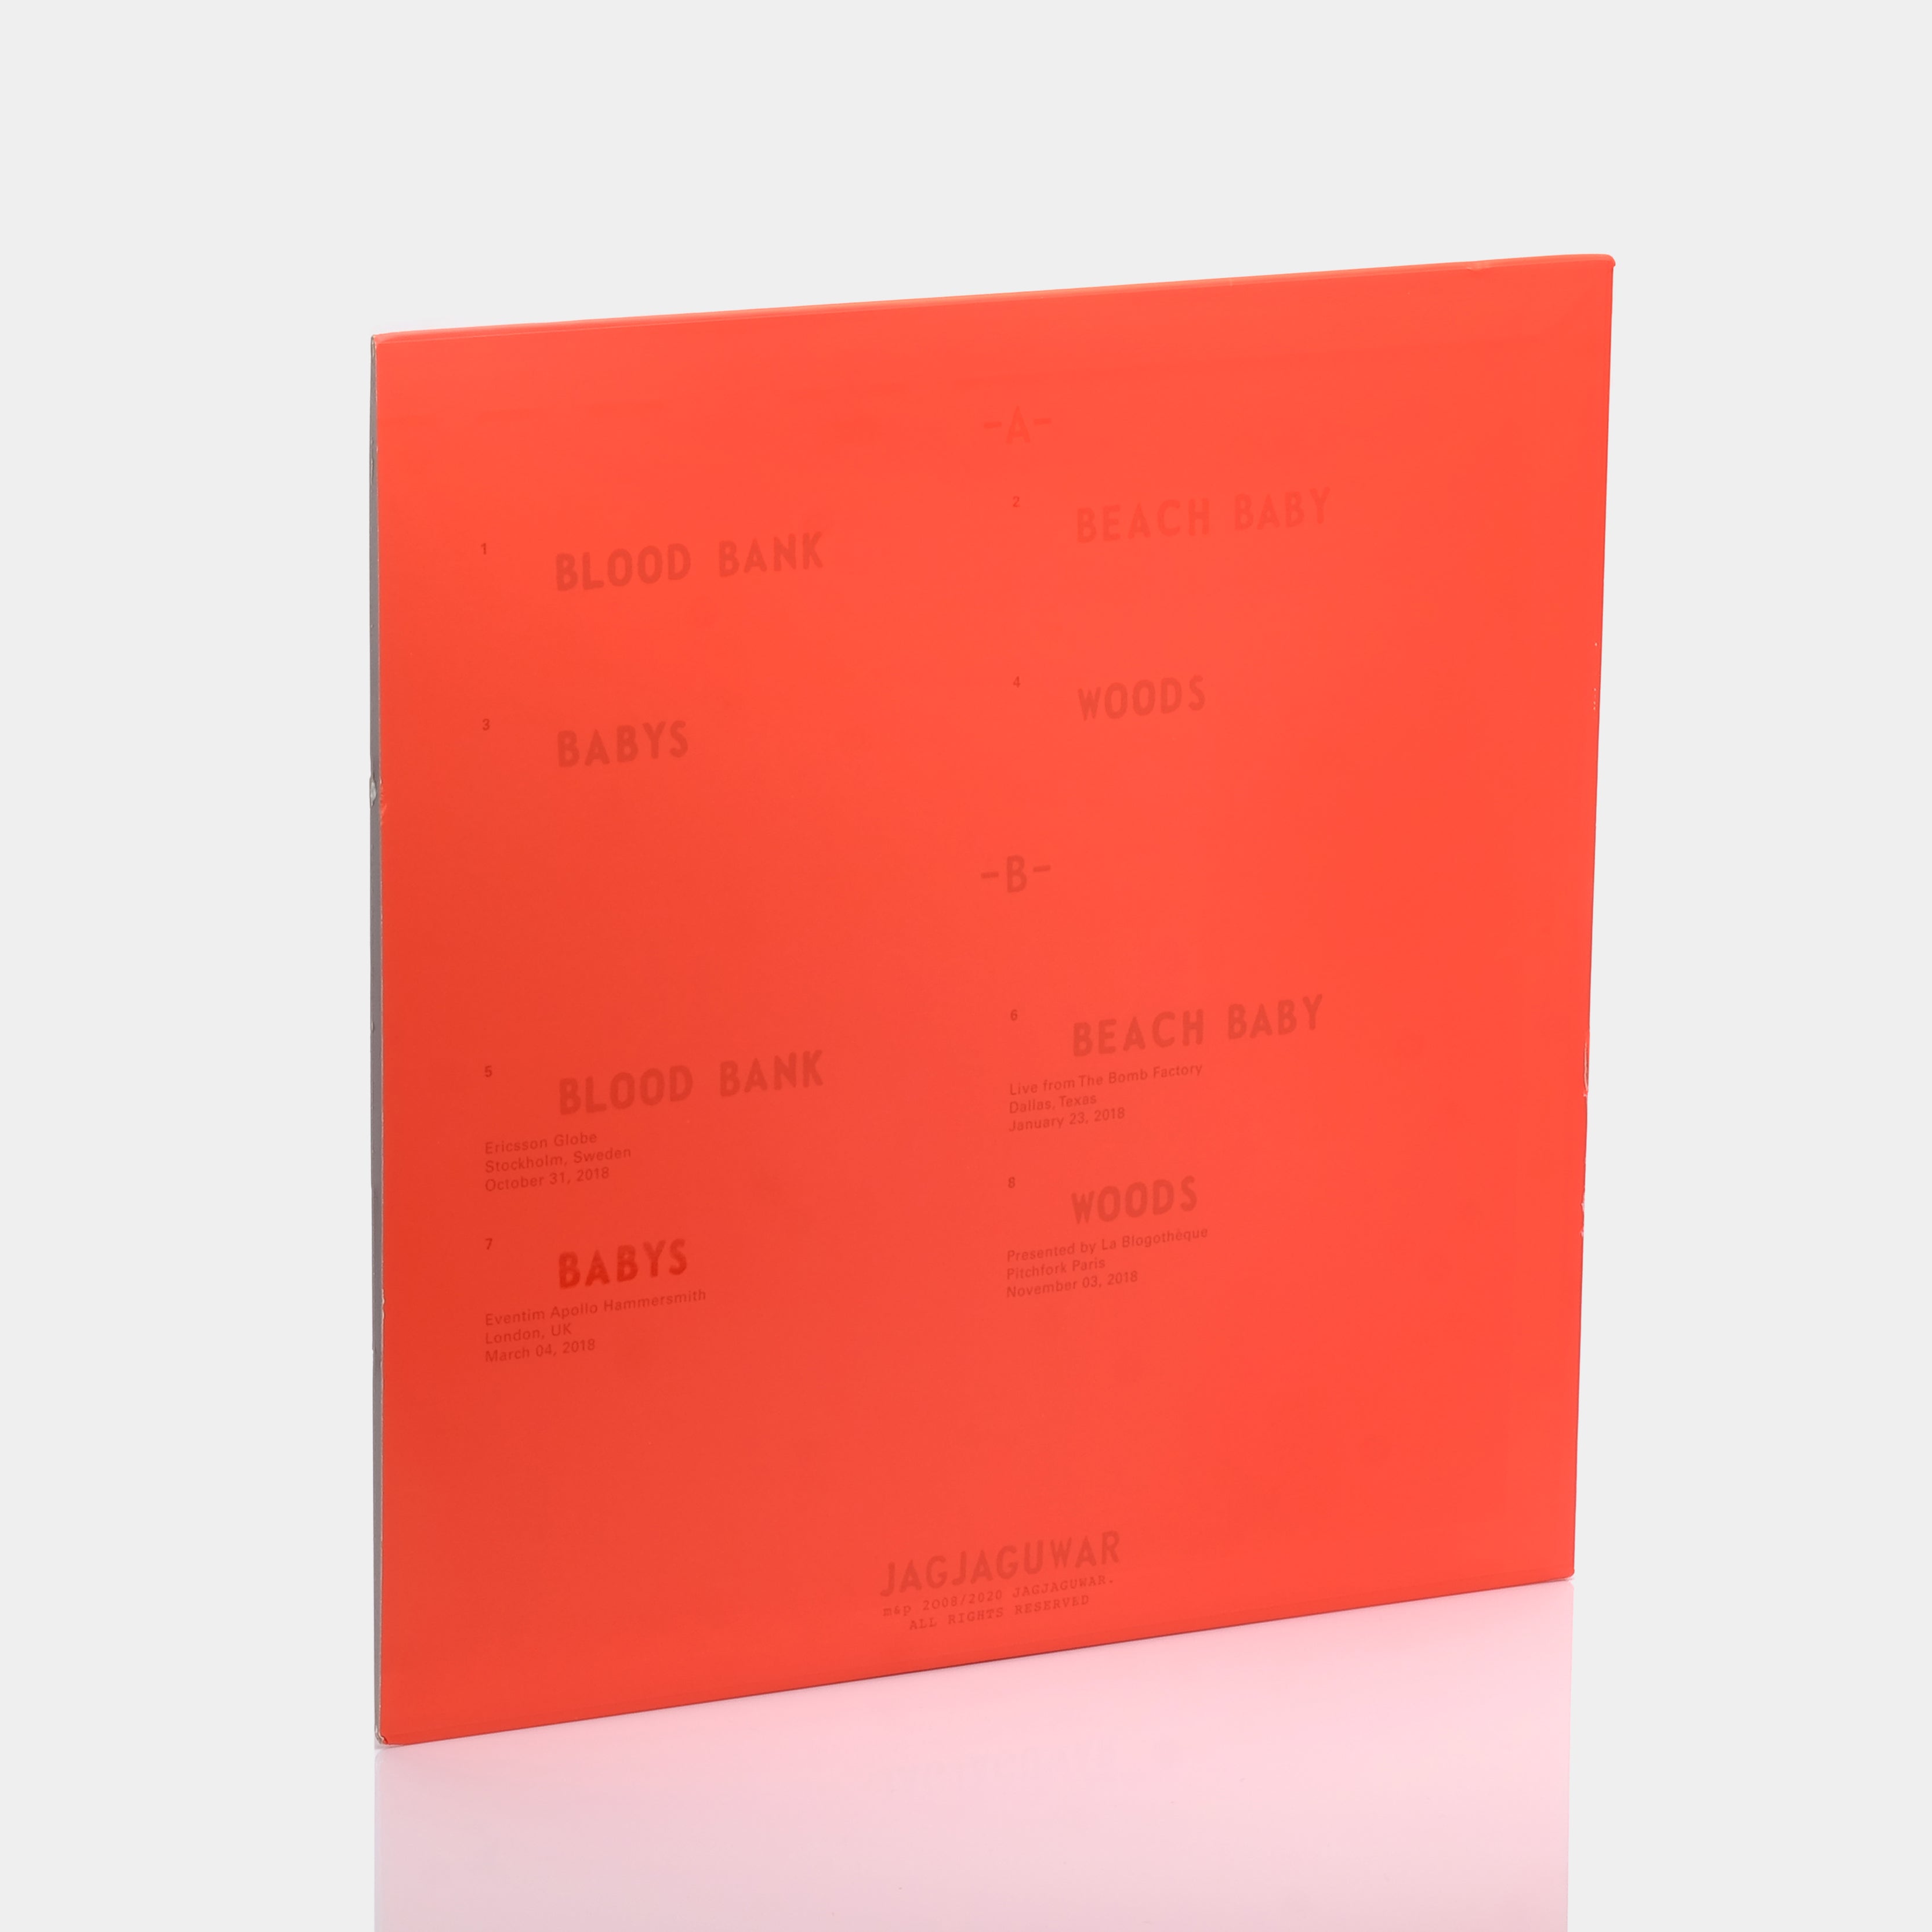 Bon Iver - Blood Bank (10th Anniversary Edition) LP Red Vinyl Record